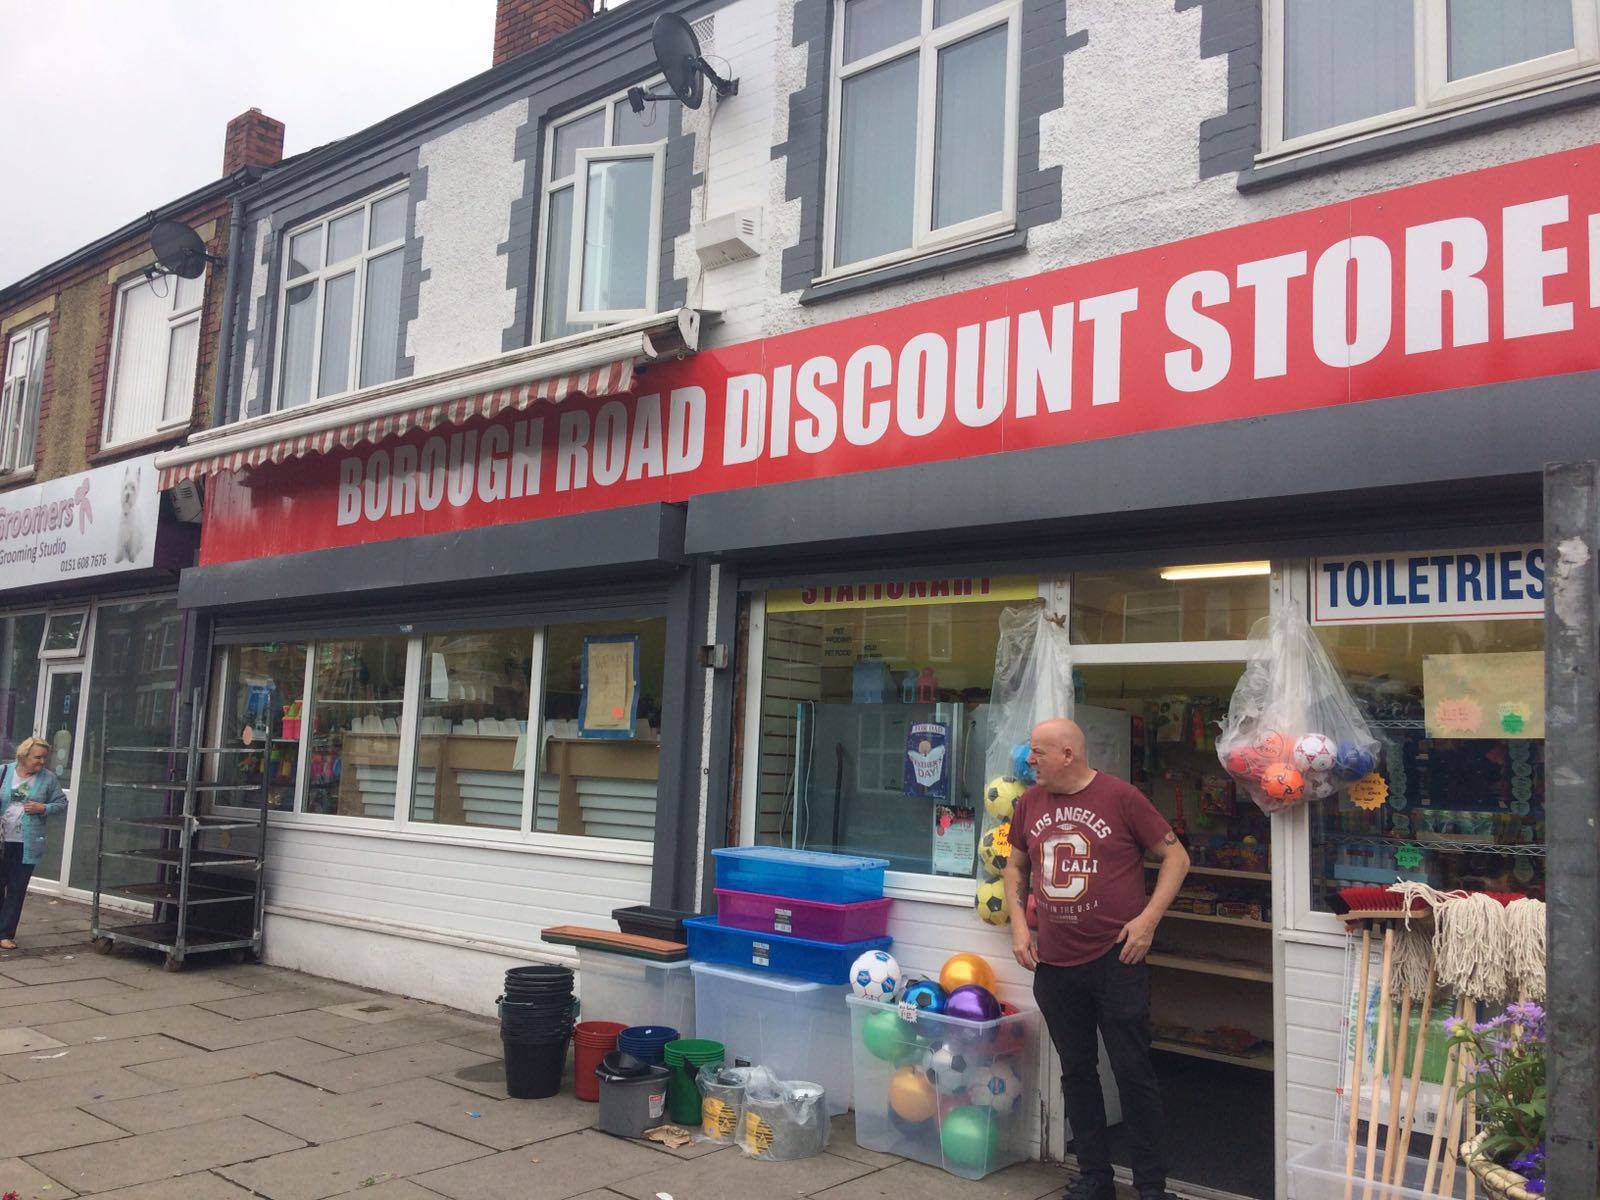 Borough Road Discount Store